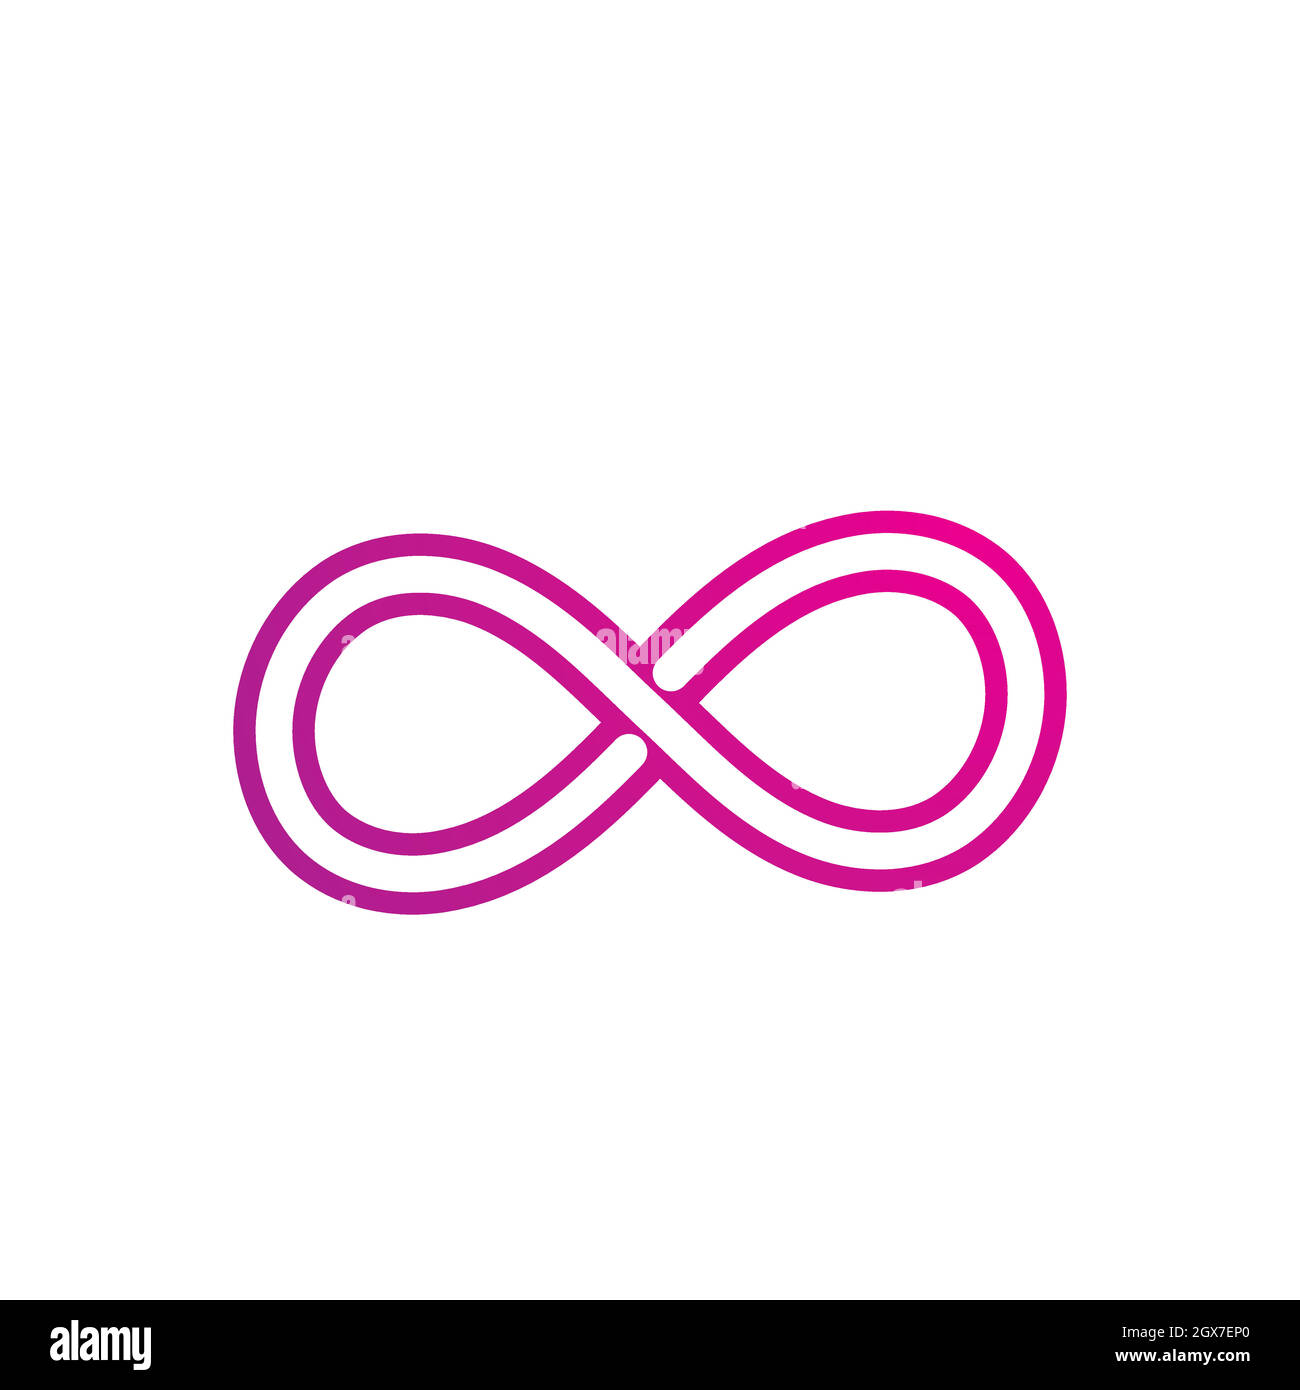 Infinity logo and symbol Design Vector Stock Vector